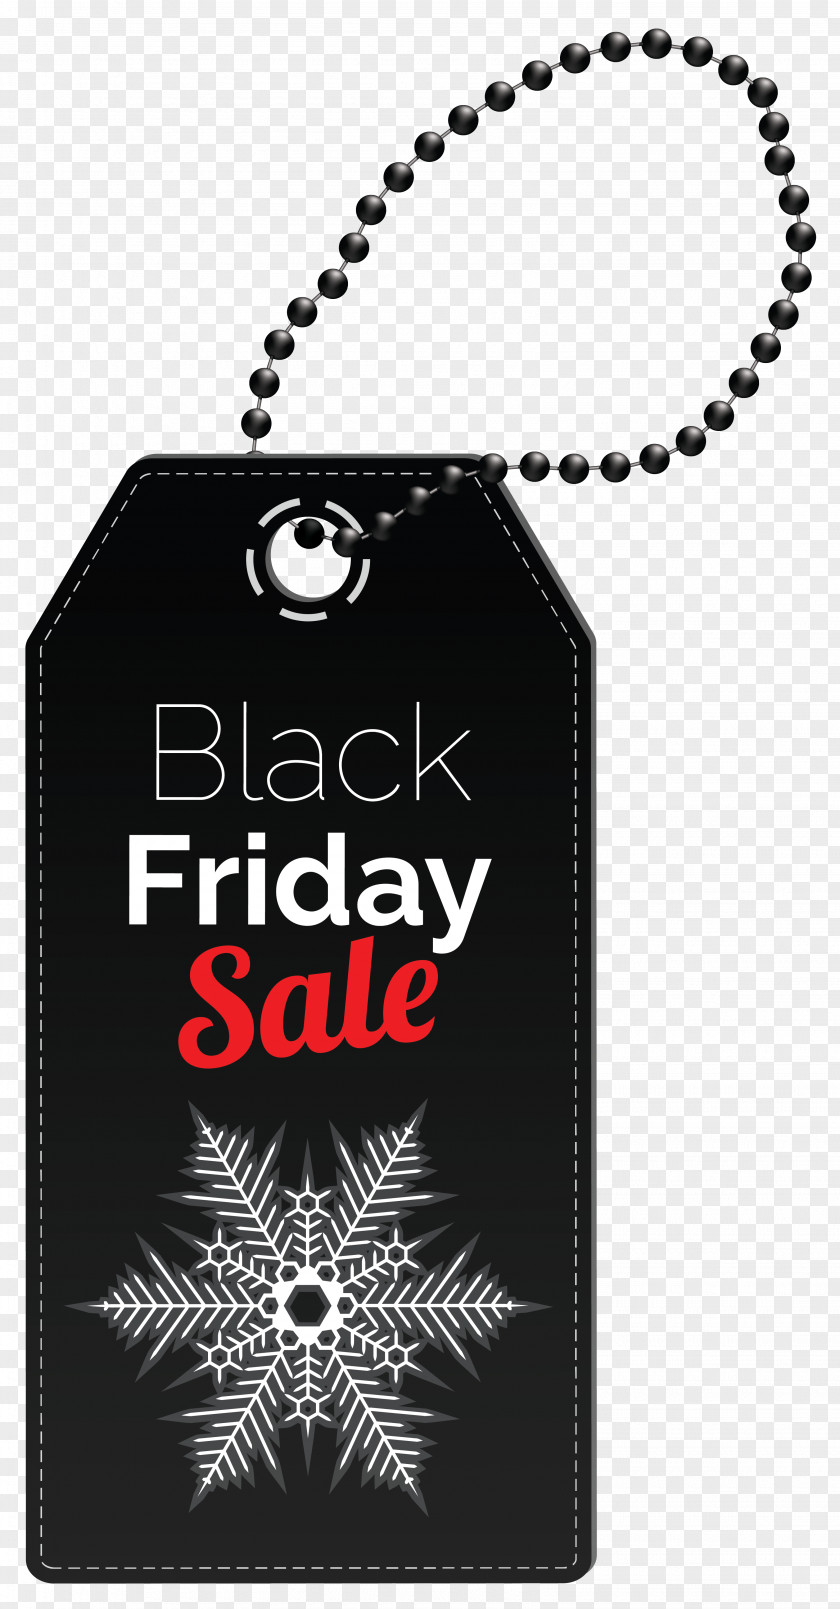 Black Tag Cliparts Friday Discounts And Allowances Sales Clip Art PNG